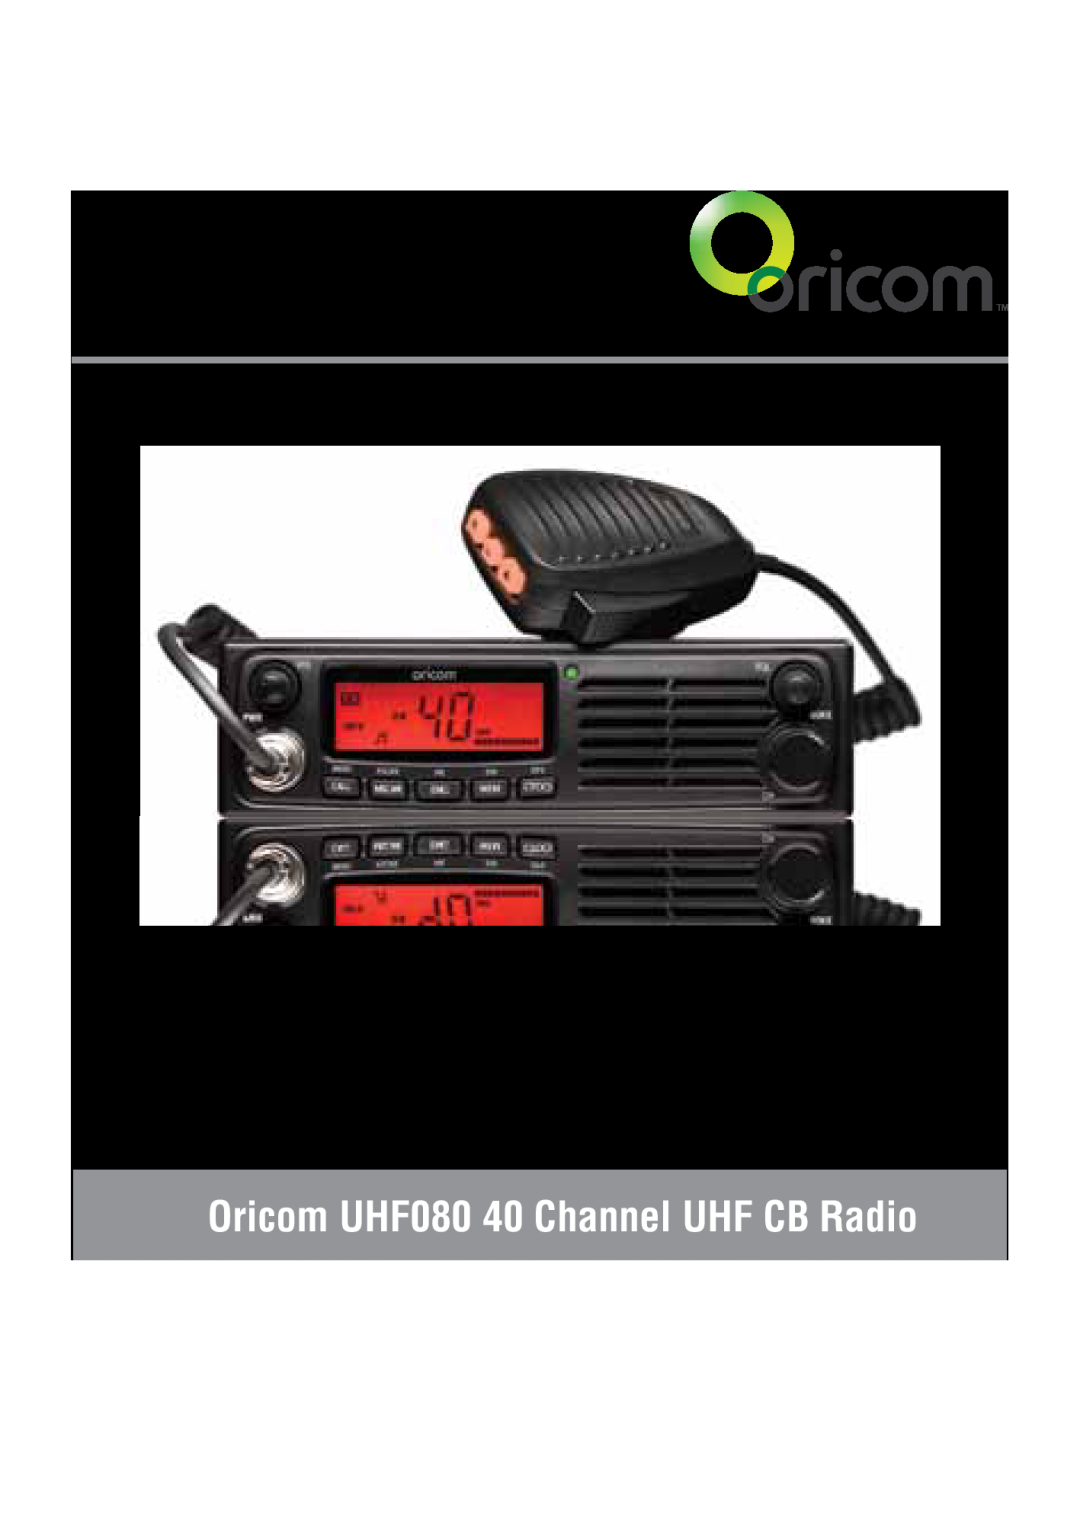 Oricom manual User Guide, Oricom UHF080 40 Channel UHF CB Radio 